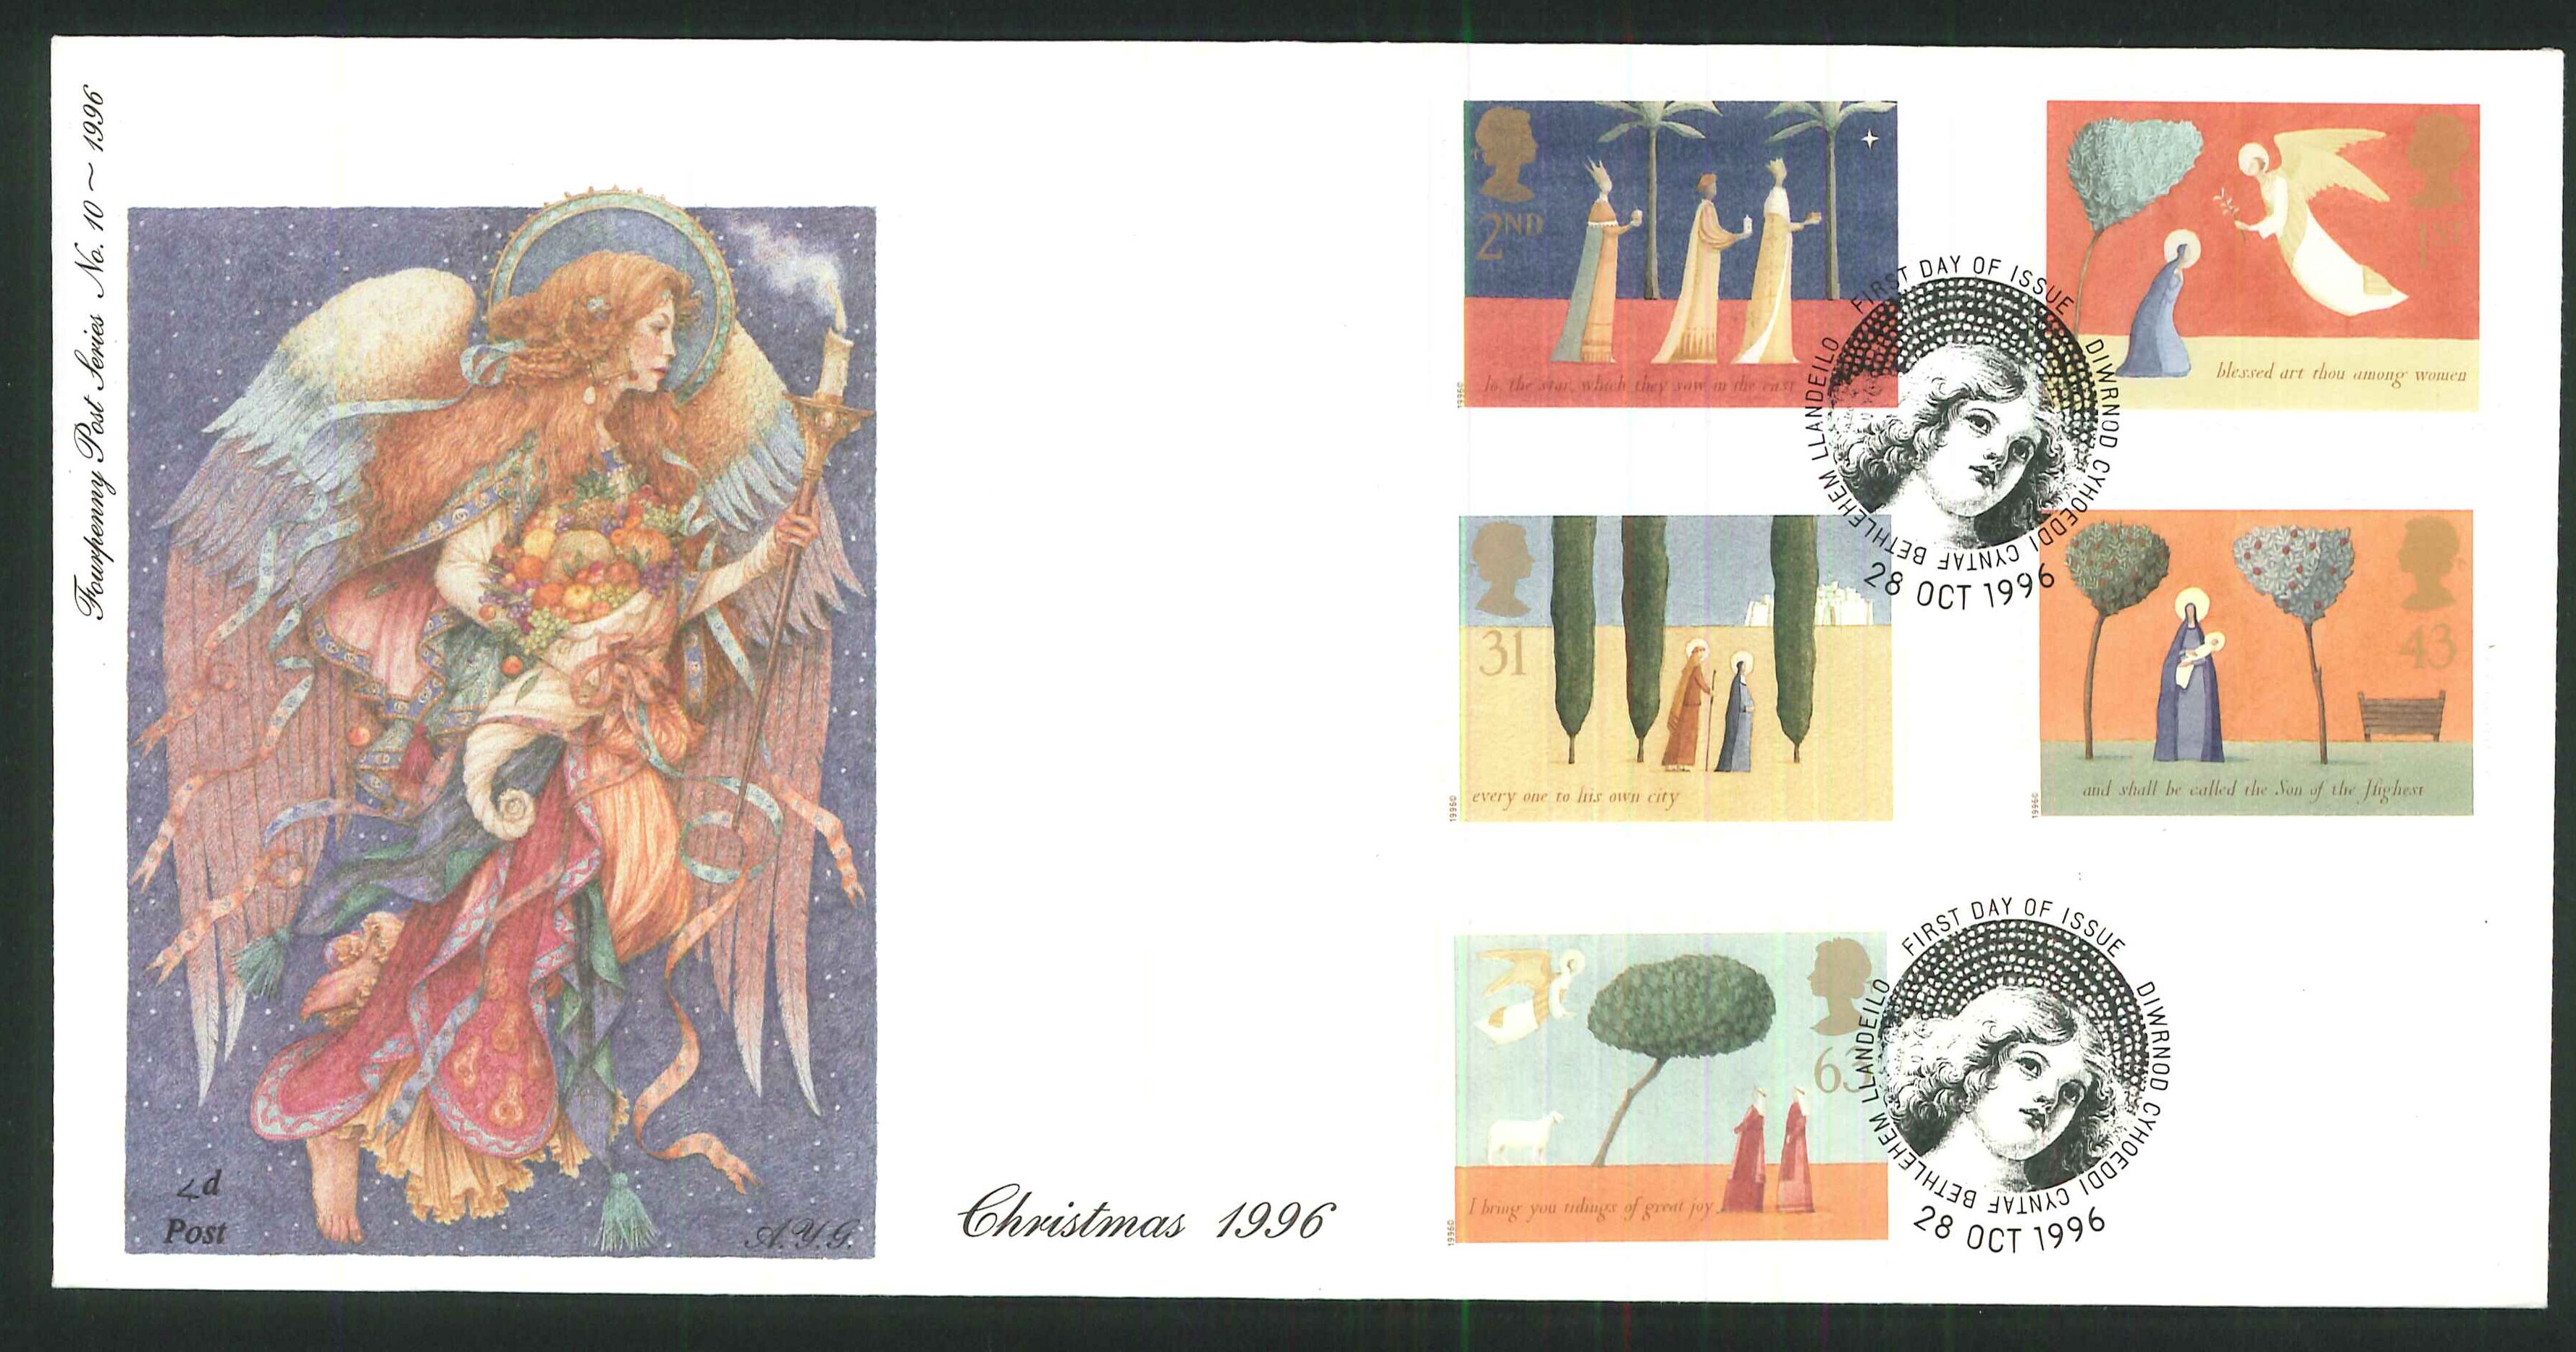 1996 - Christmas, First Day Cover - Llandeilo Postmark